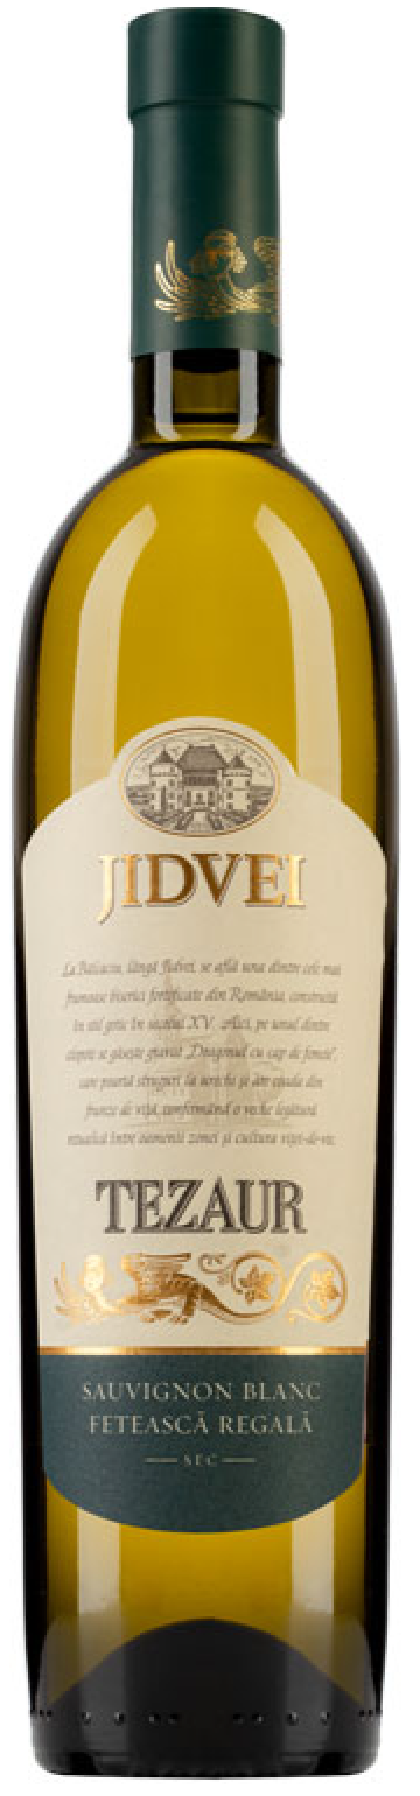 Vin alb - Tezaur, Sauvignon Blanc & Feteasca Regala, sec, 2020 | Jidvei